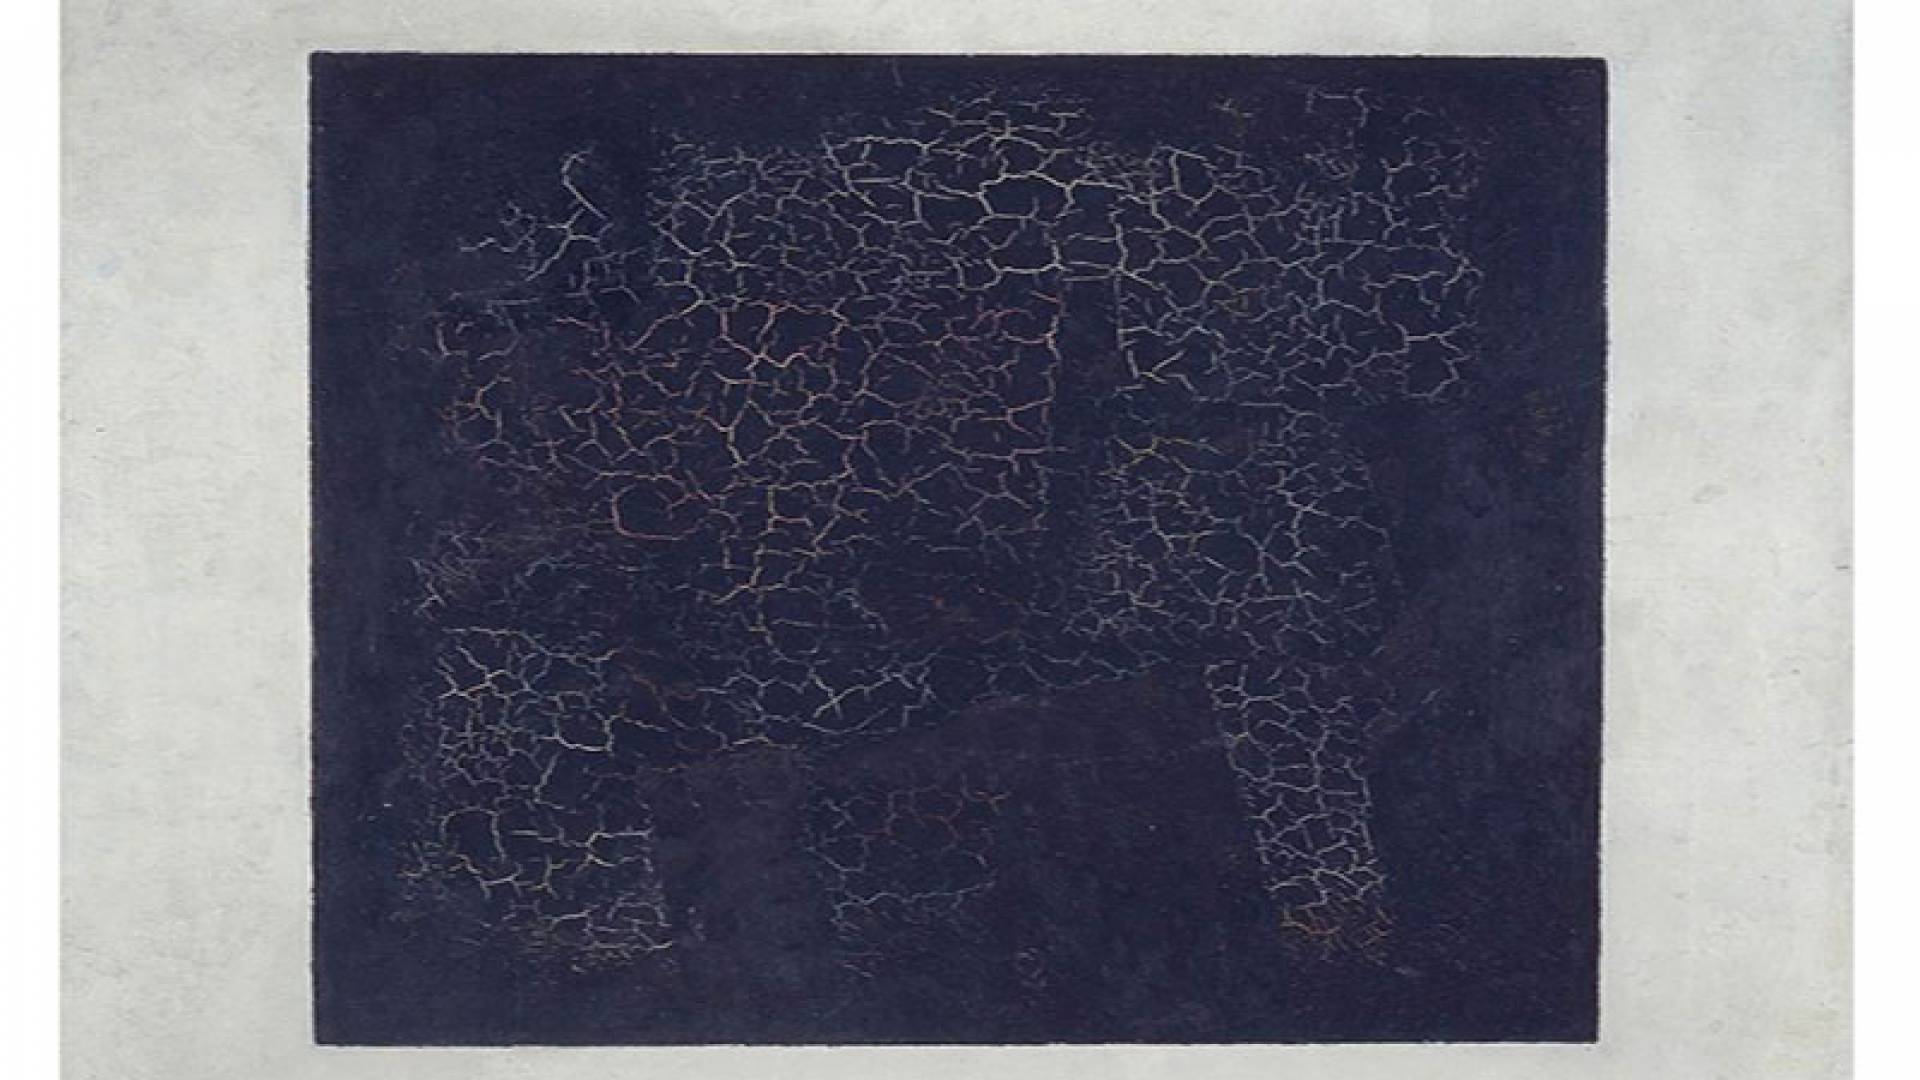 TRETYAKOV GALLERY, Malevich's Black Square